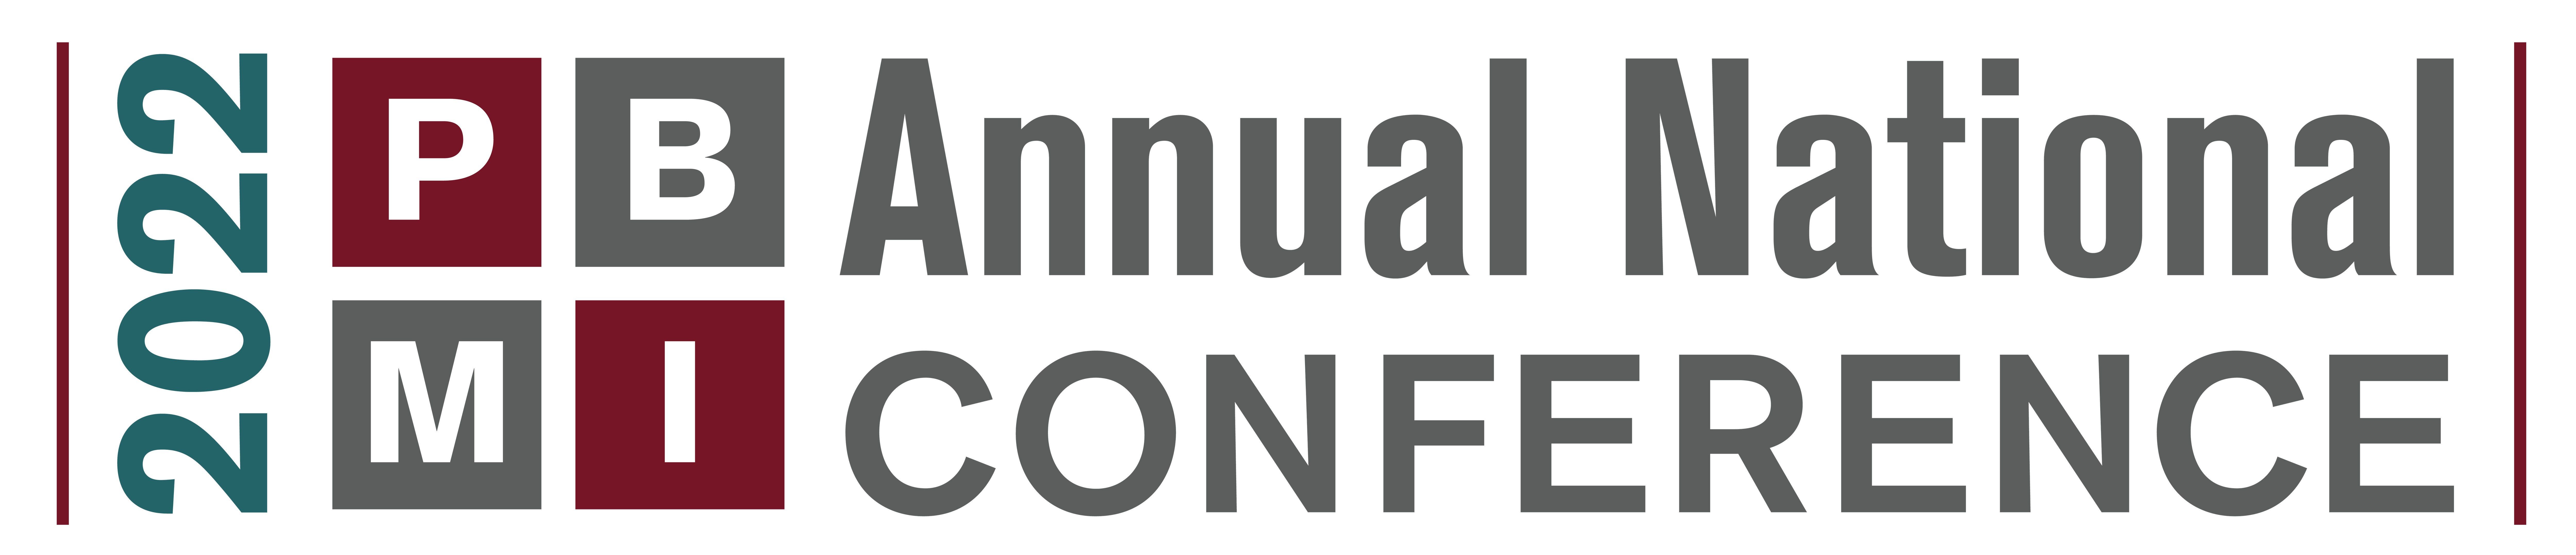 PBMI_Conferance_Logo